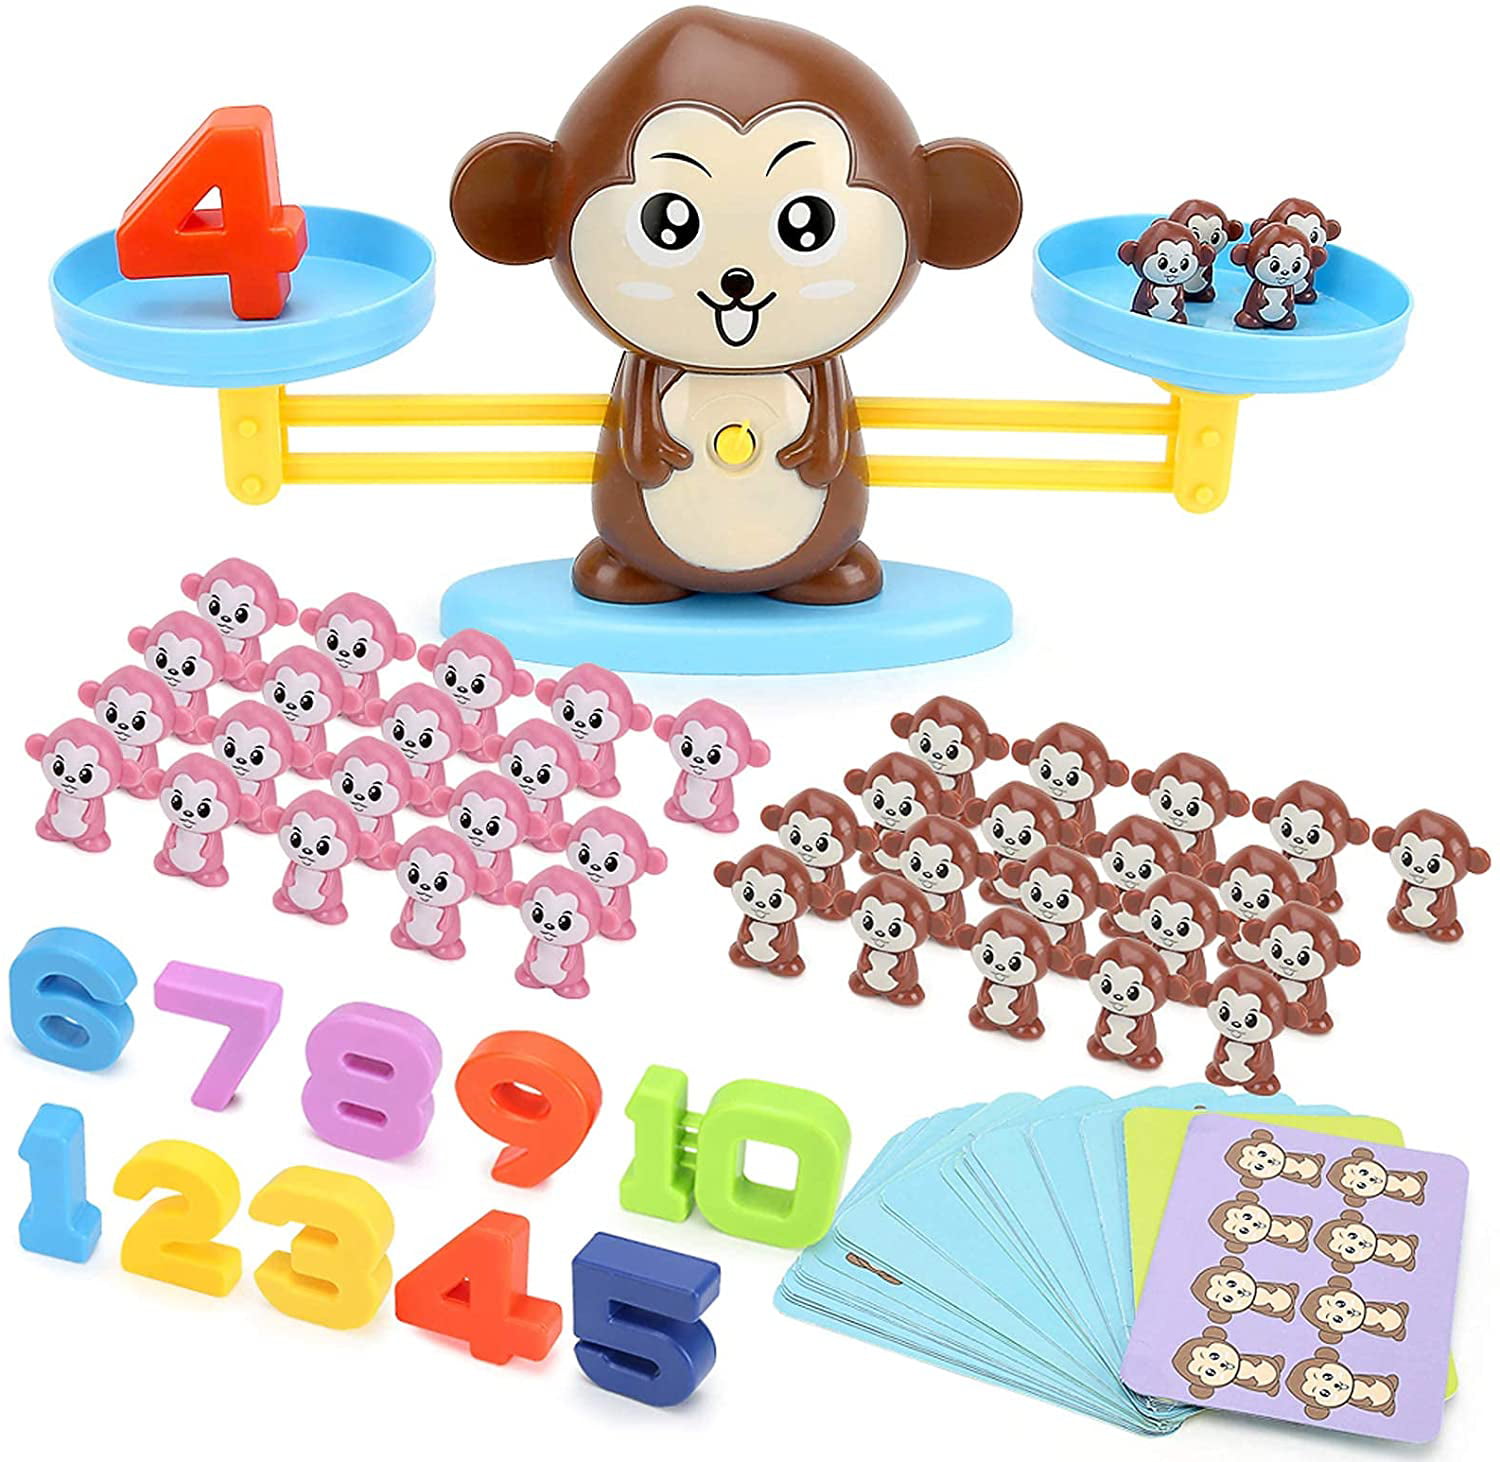 Monkey Balance Cool Math Game STEM Montessori Preschool Learning Counting Toys G 